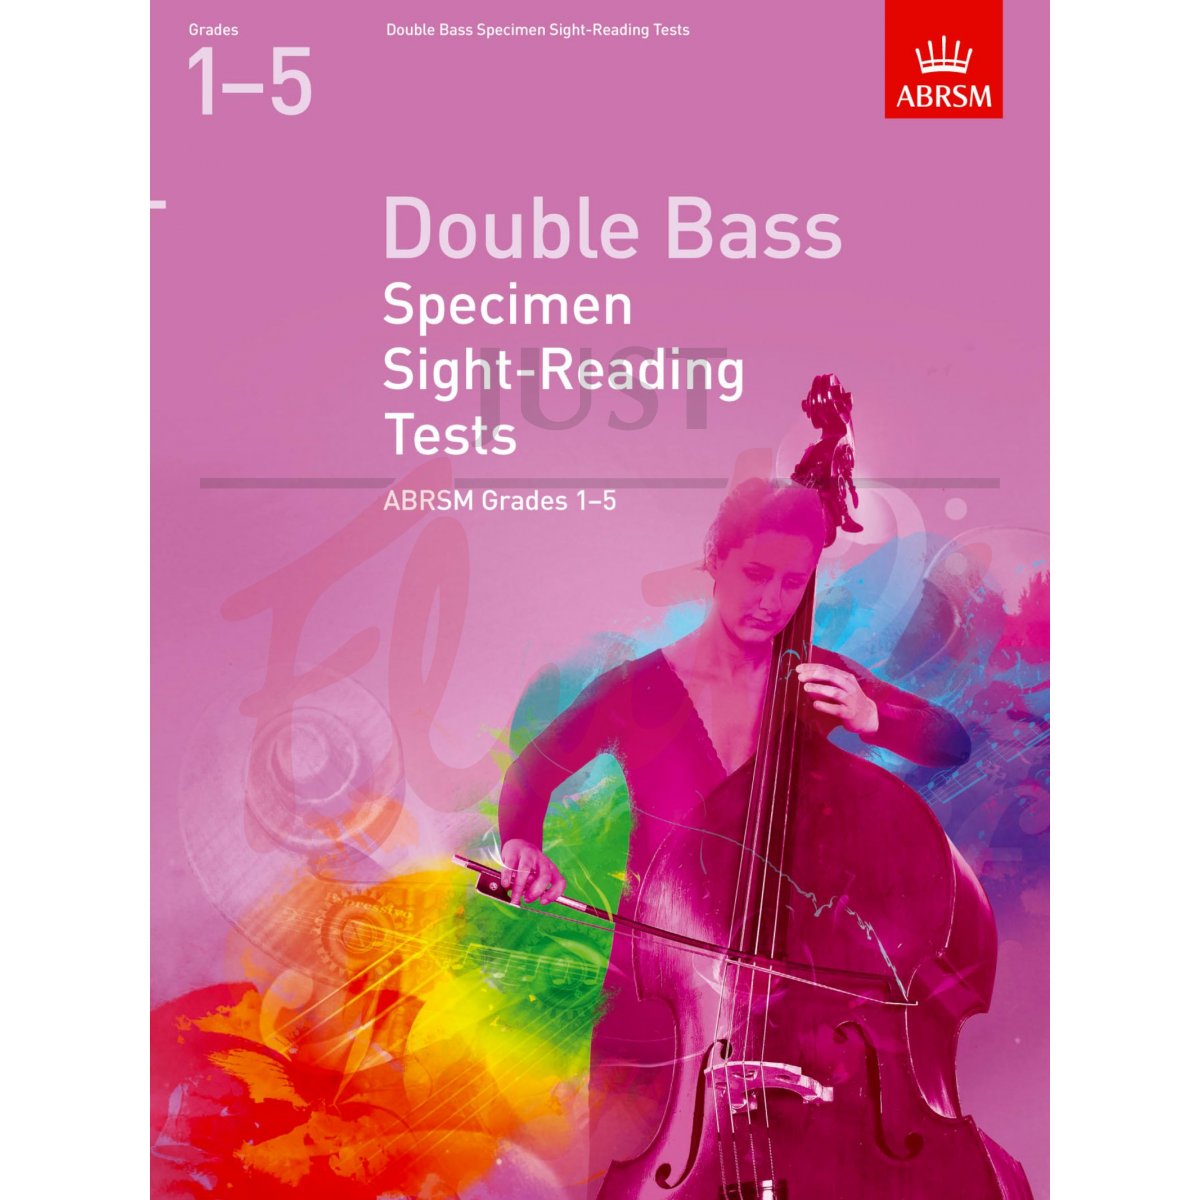 Specimen Sight-Reading Tests [Double Bass] Grades 1-5